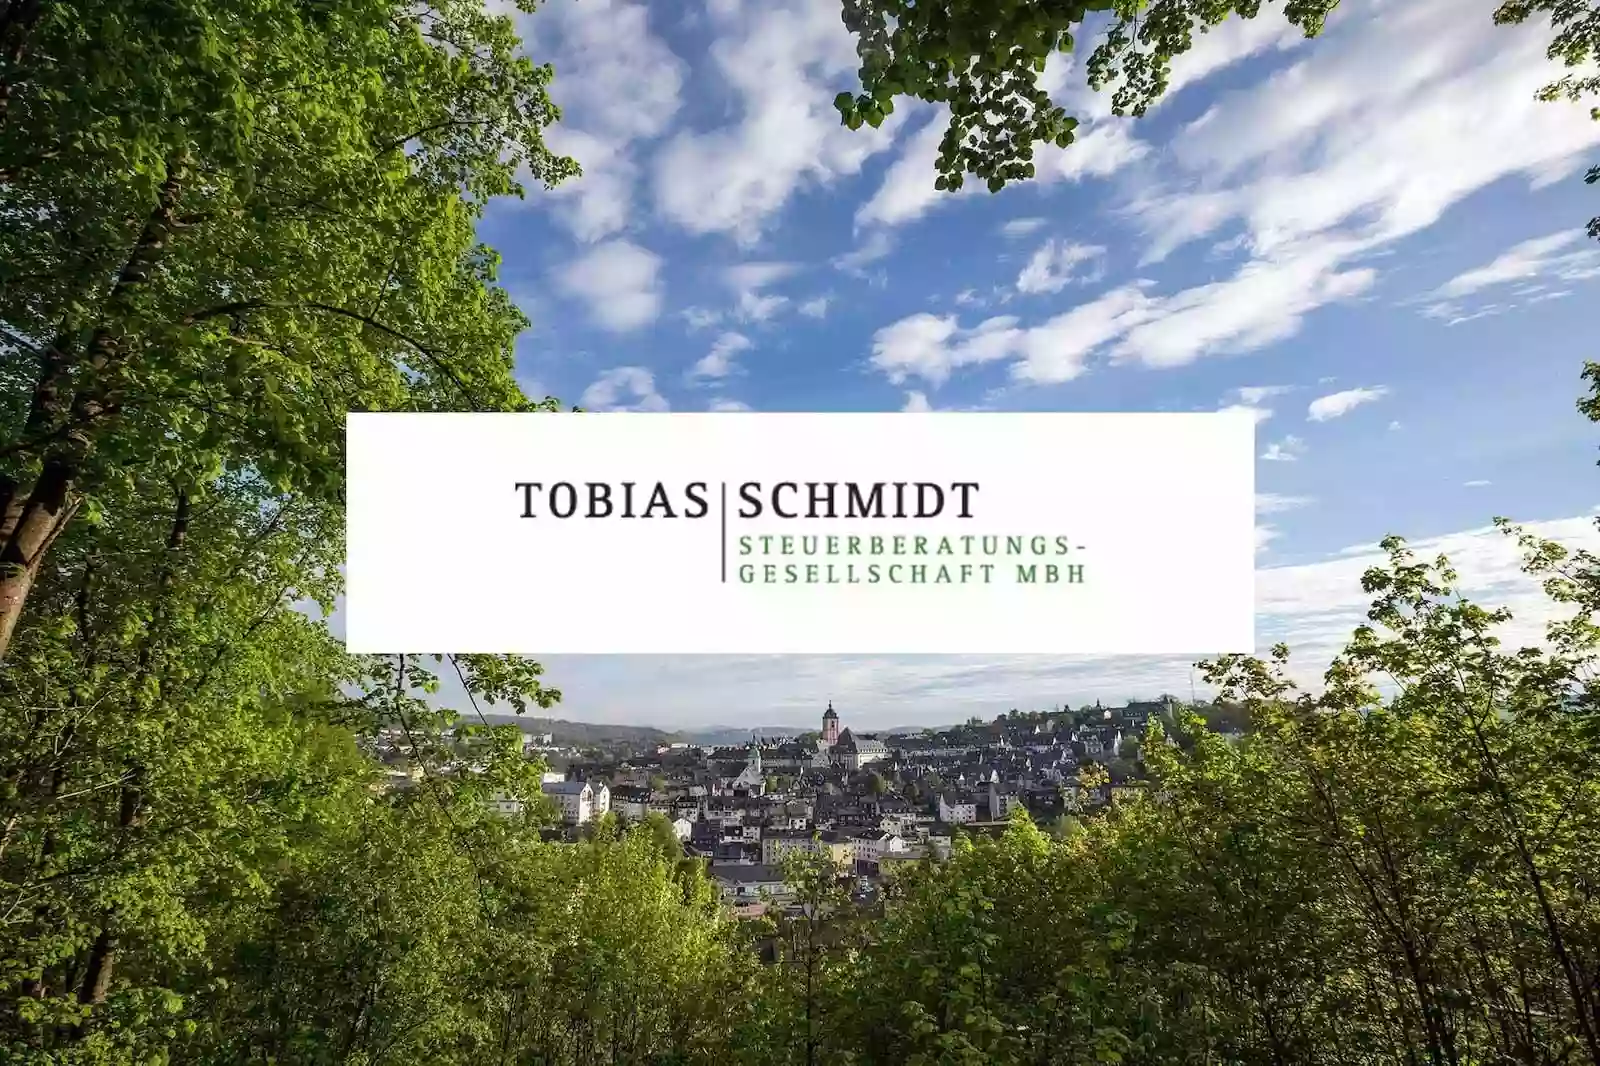 Tobias Schmidt Steuerberatungsgesellschaft mbH